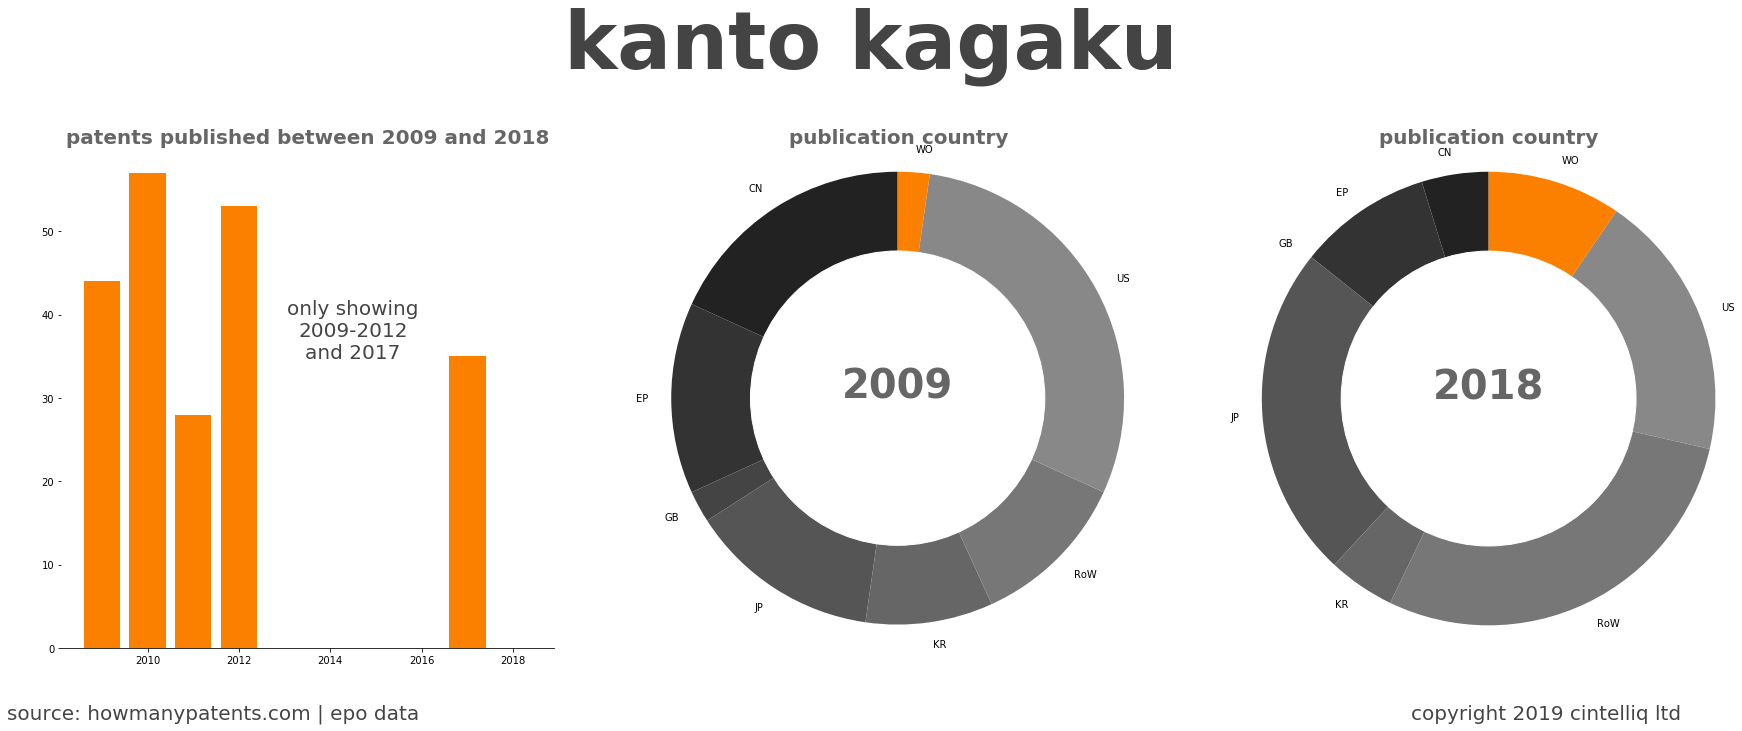 summary of patents for Kanto Kagaku